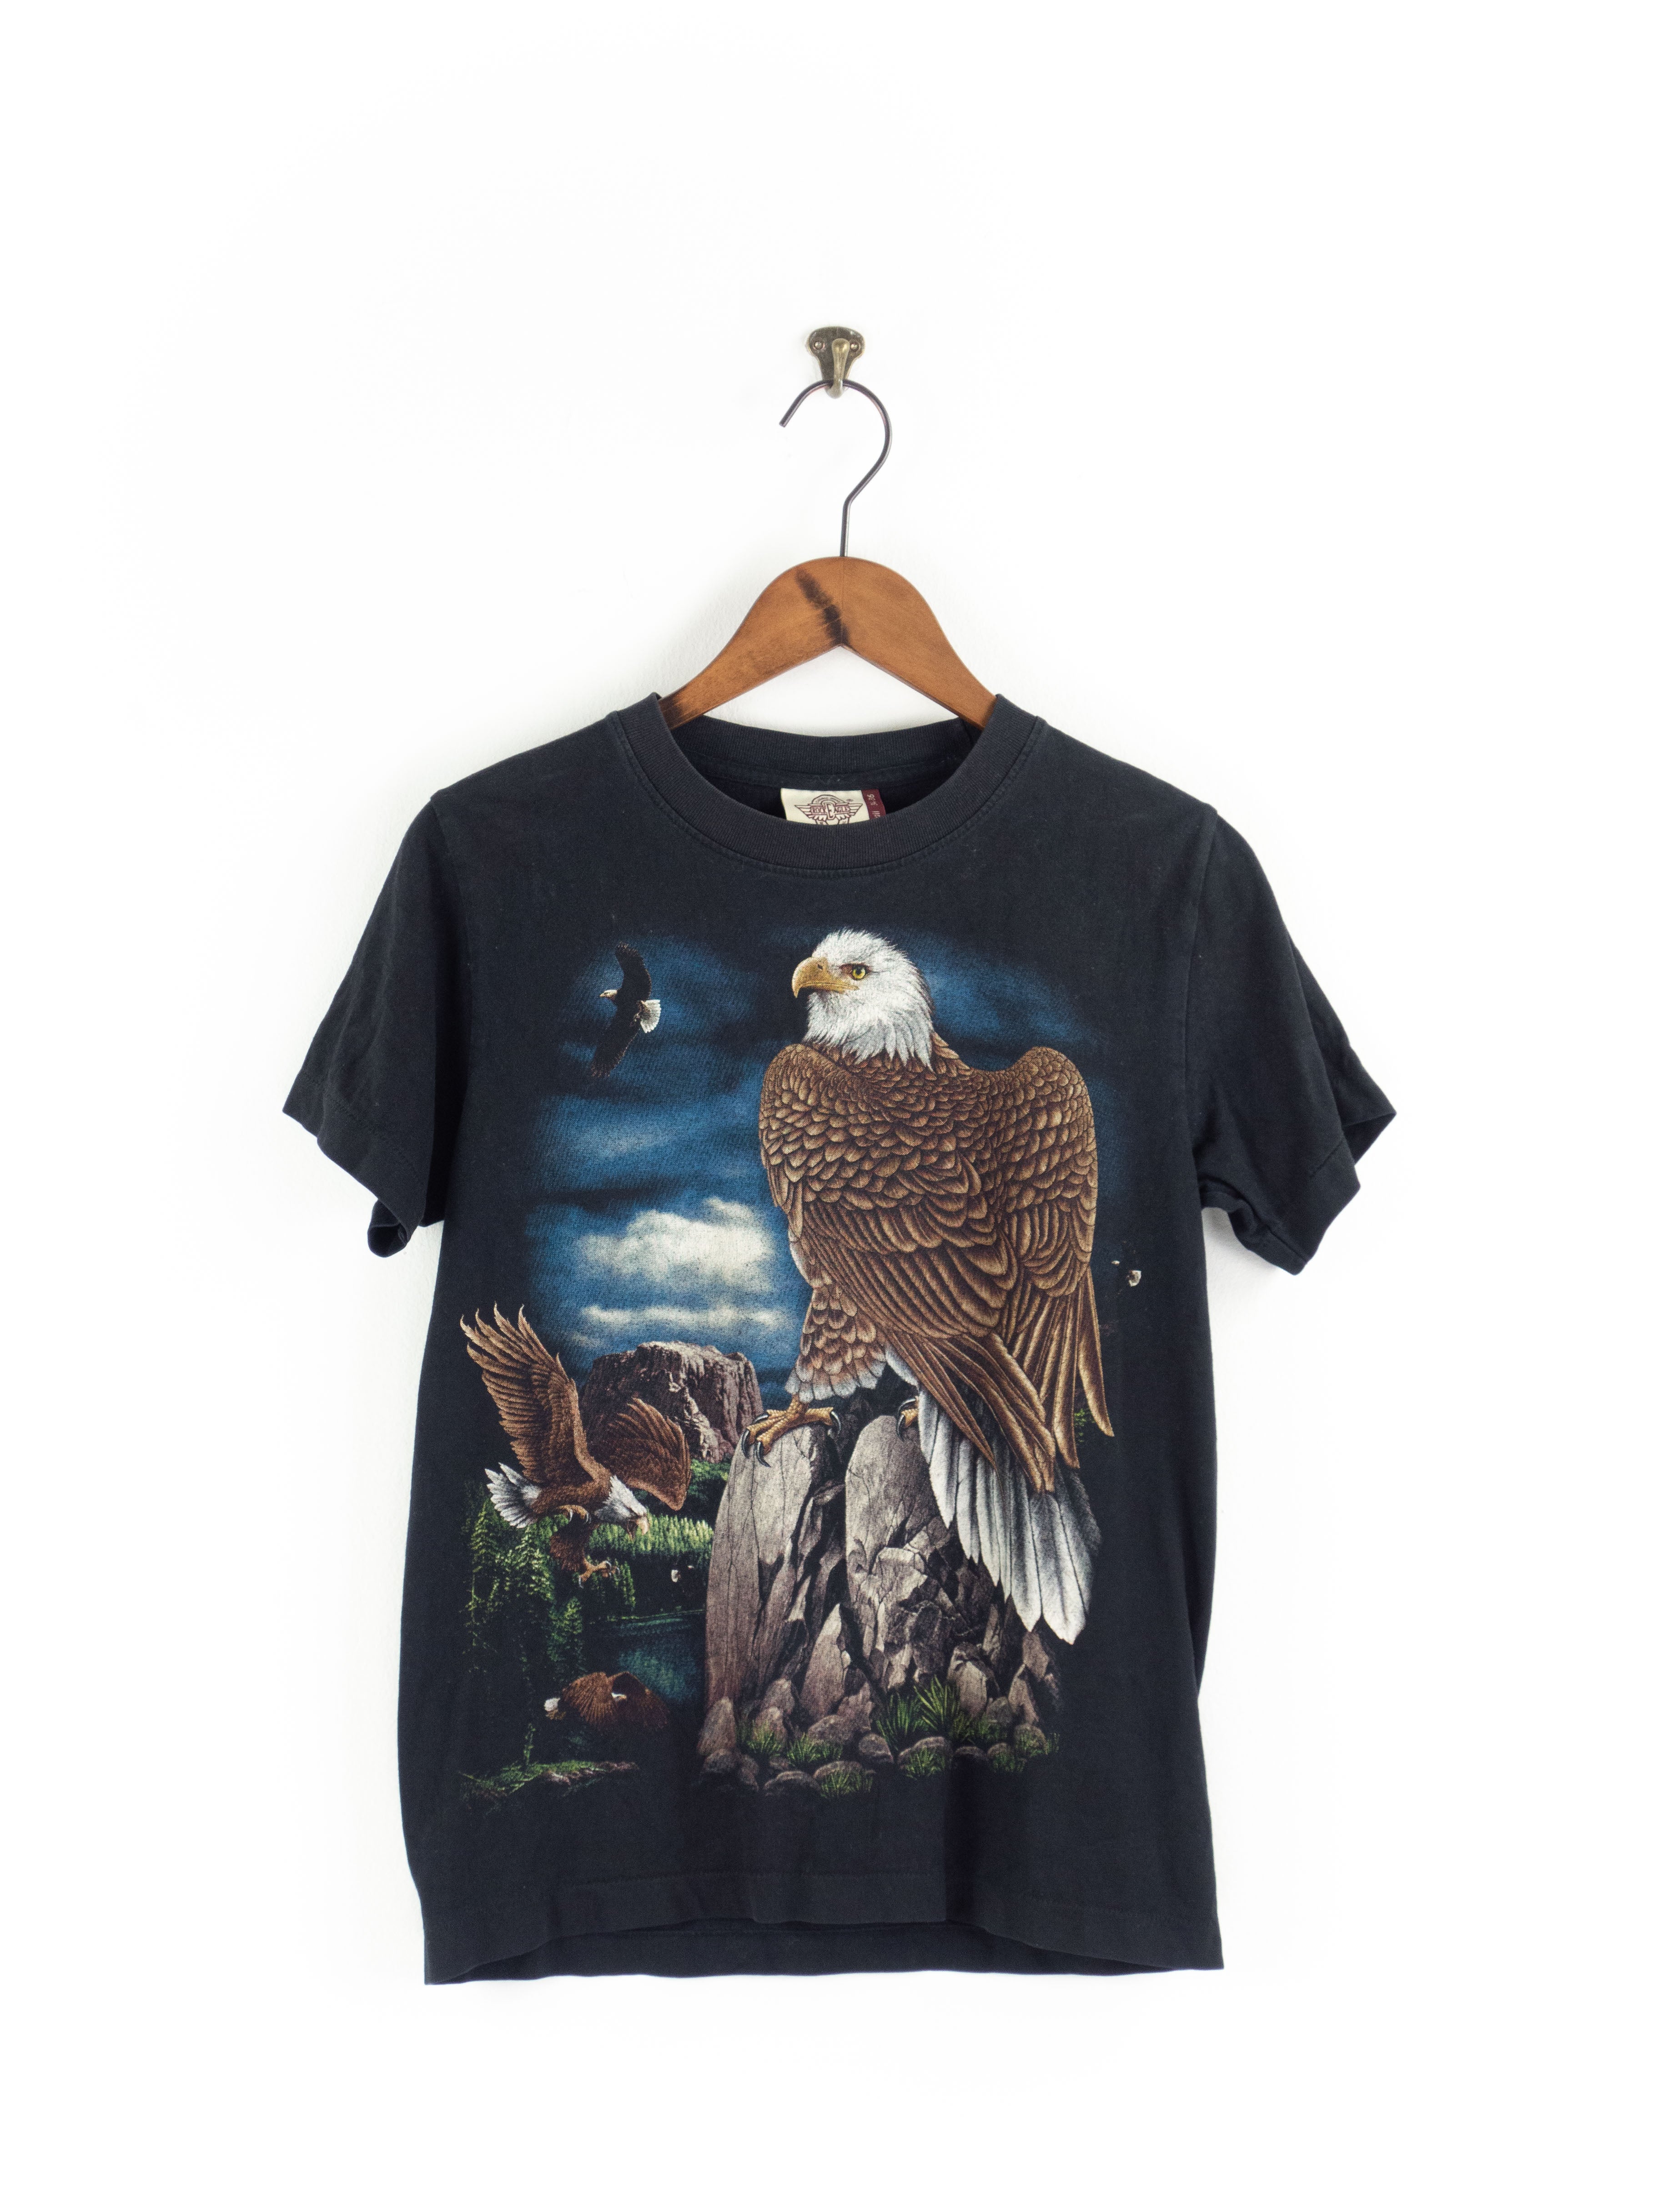 Rock Eagle T-Shirt XS/S